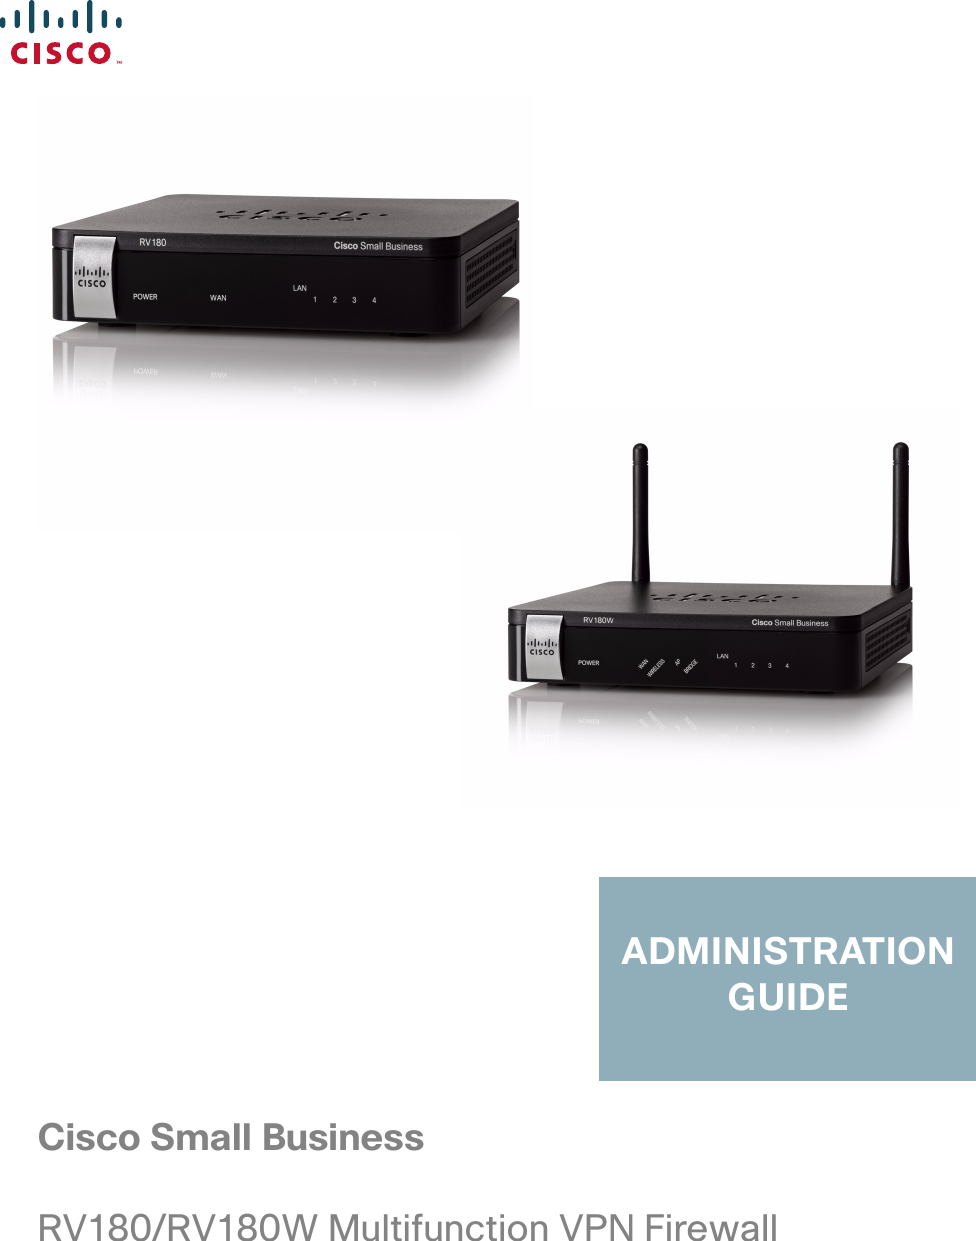  Cisco Small BusinessRV180/RV180W Multifunction VPN Firewall ADMINISTRATION GUIDE